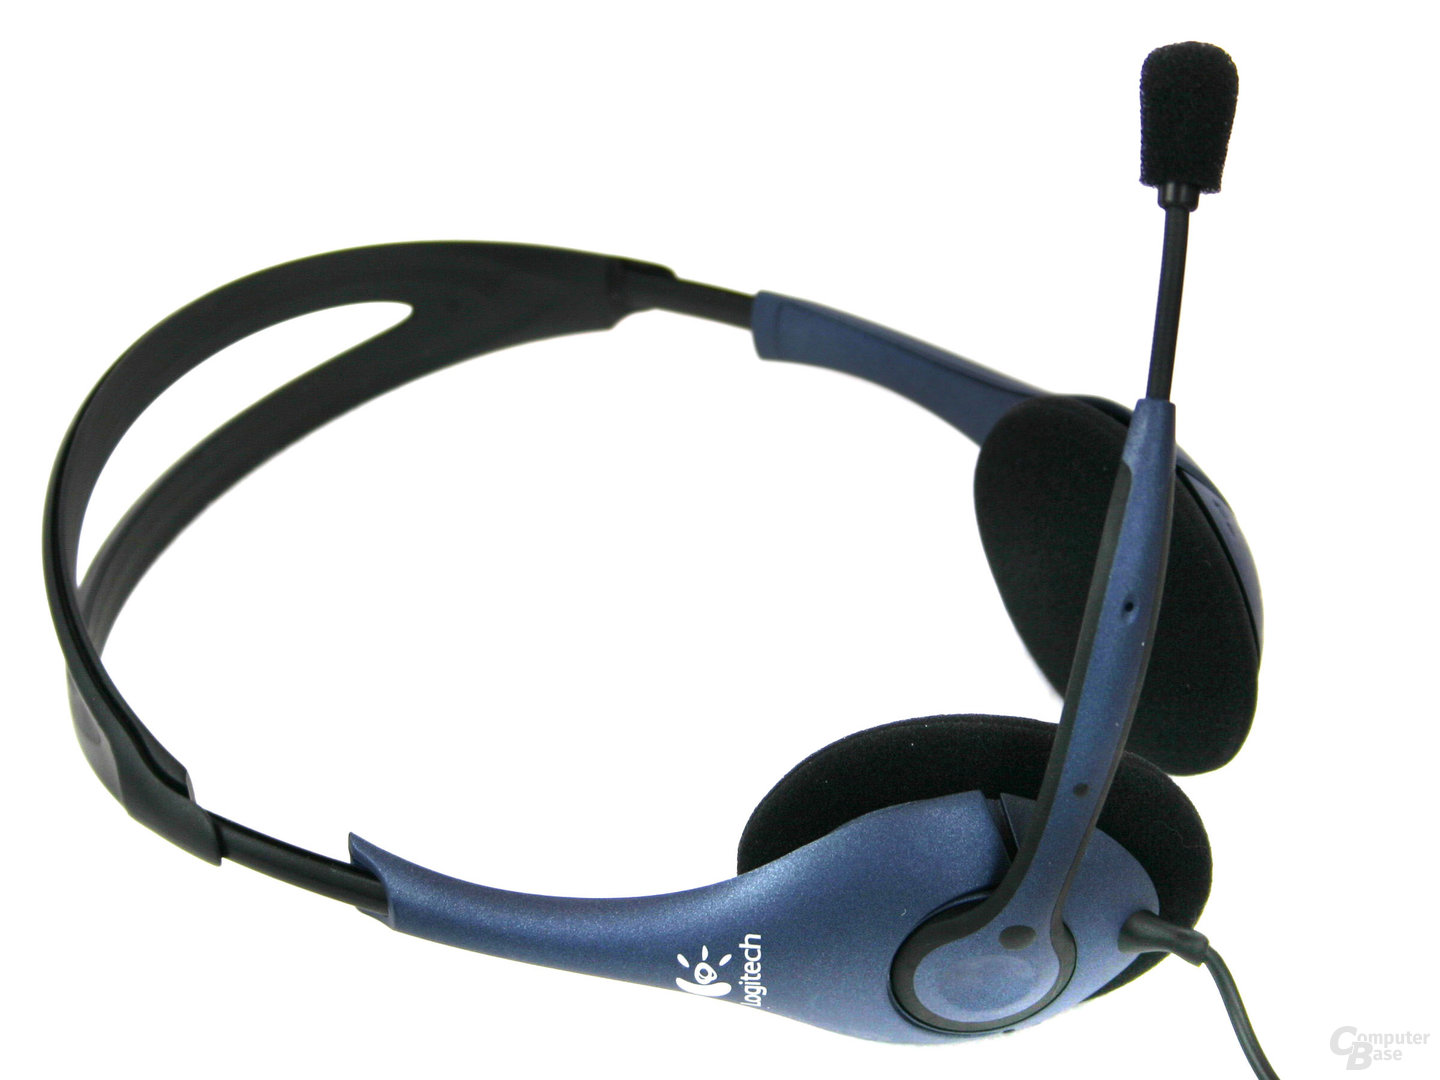 Logitech Premium Stereo Headset #2